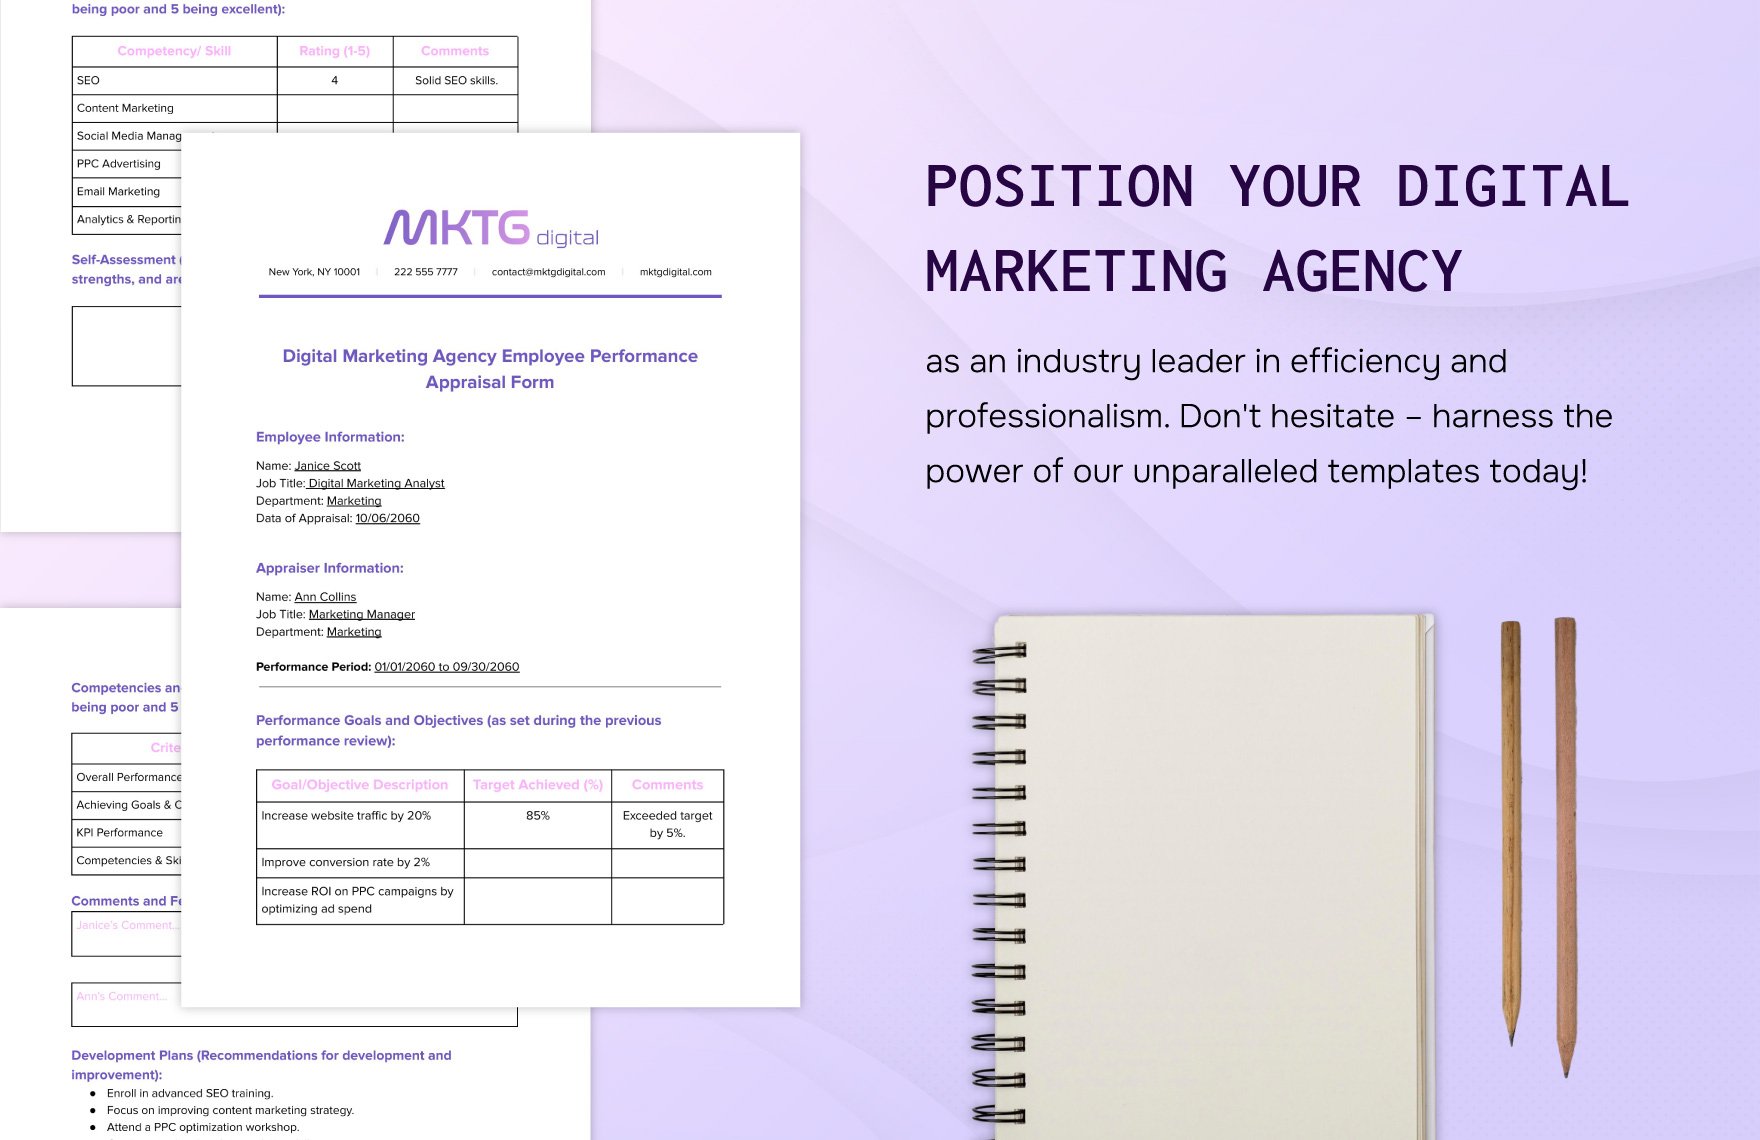 Digital Marketing Agency Employee Performance Appraisal Form Template